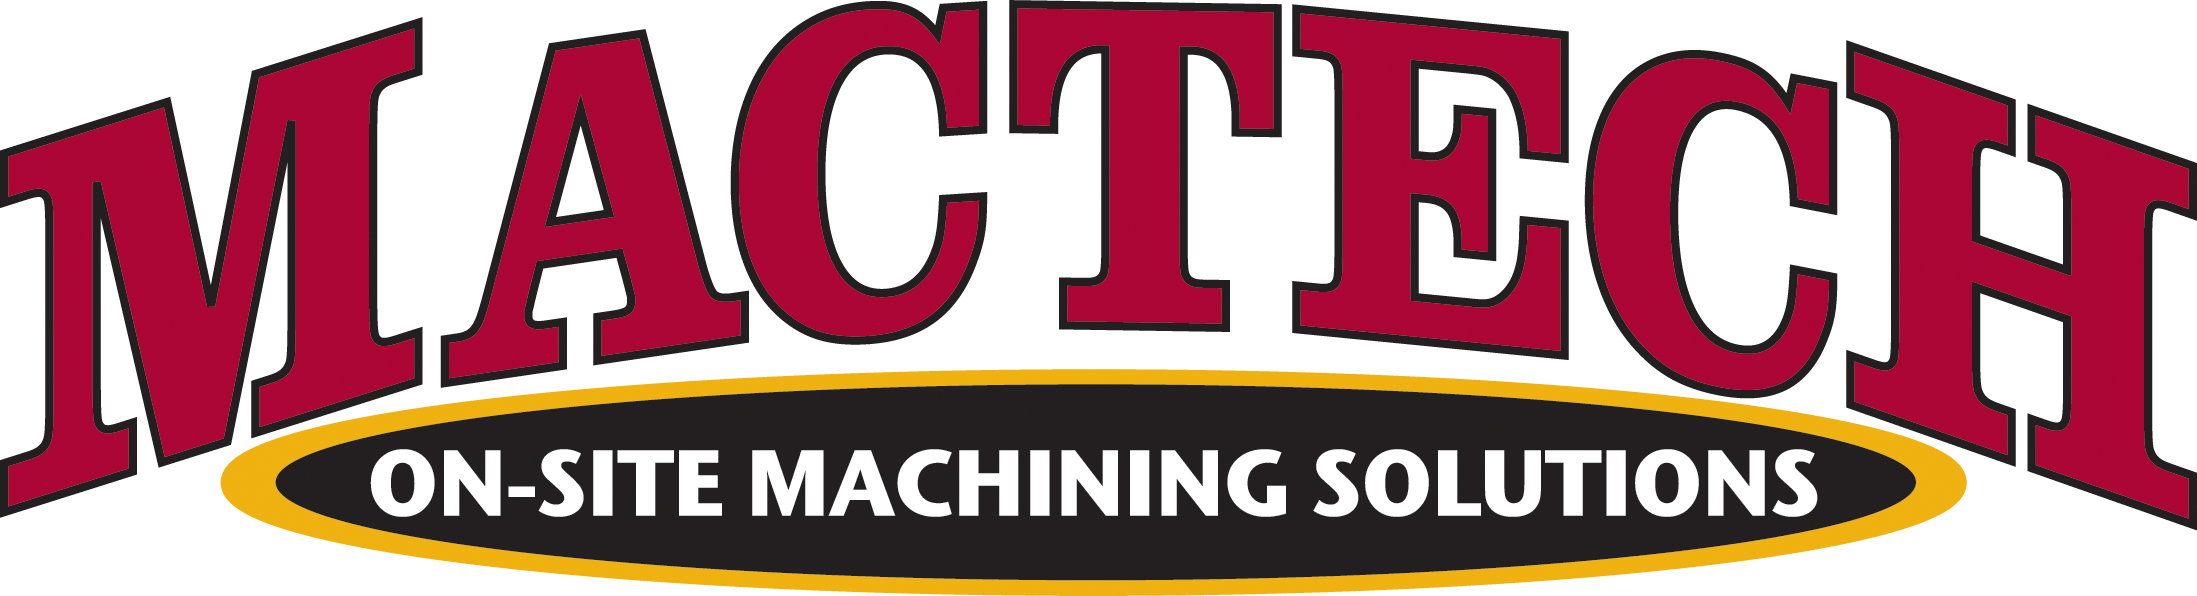 Mactech logo FINAL (2).png